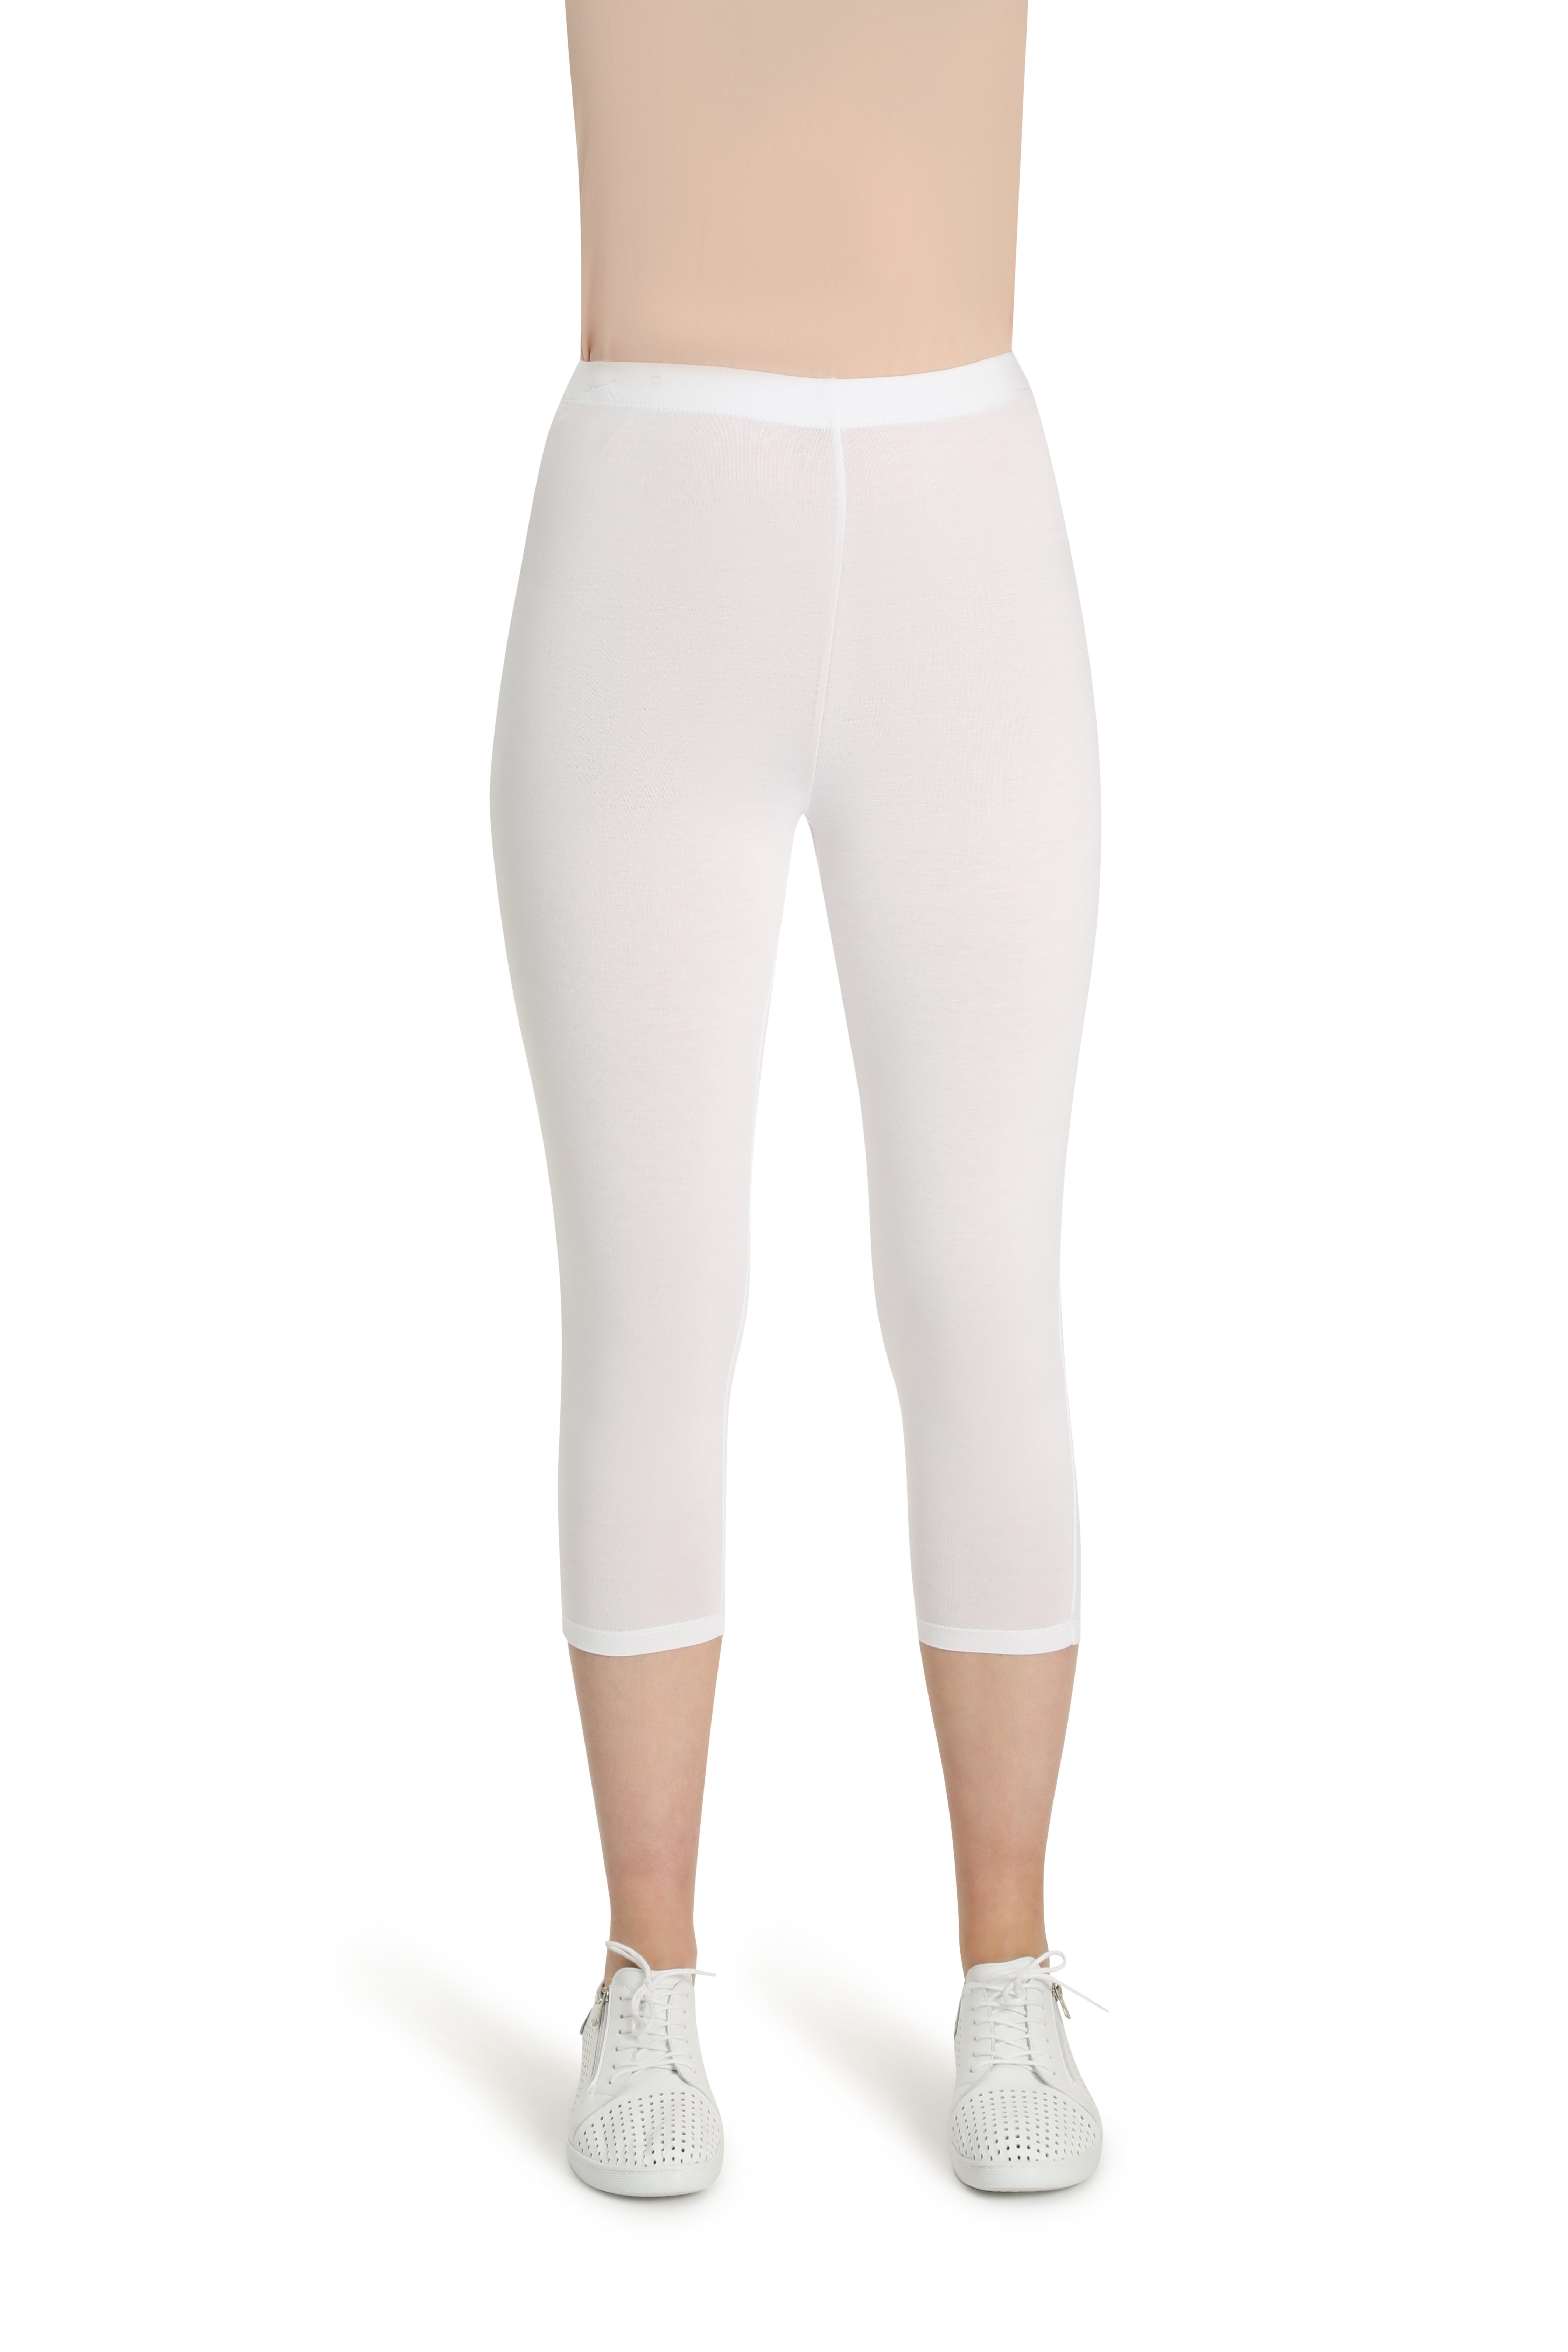 Women's PLUS Basic Cotton Jersey Elastic High Waist Mid Calf Length Capri  Leggings - Walmart.com